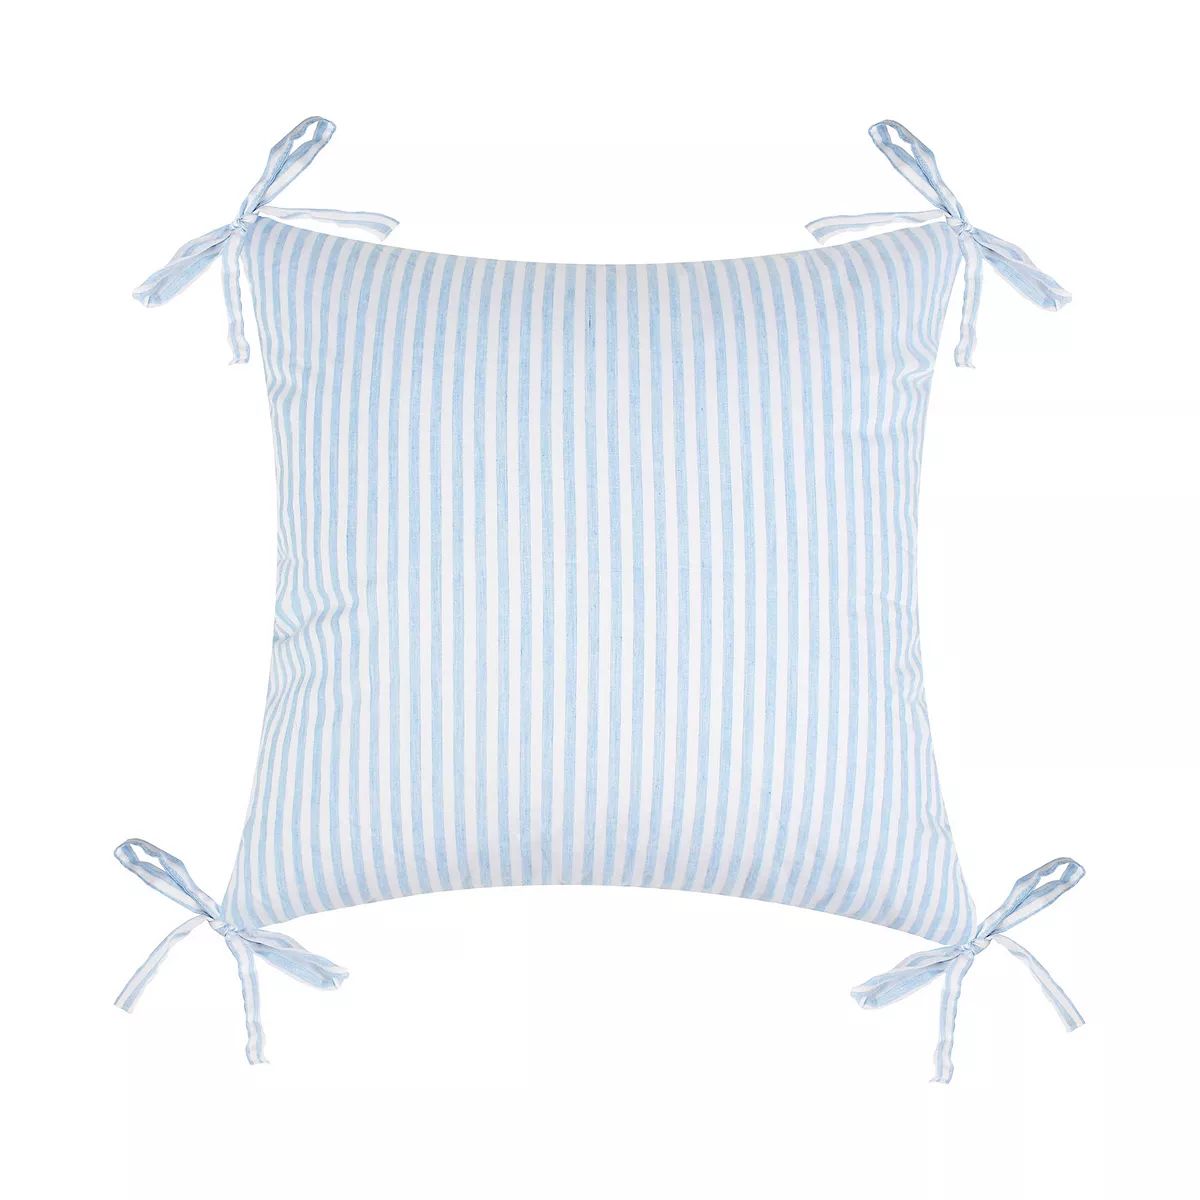 Draper James Striped Decorative Pillow with Bows | Kohl's